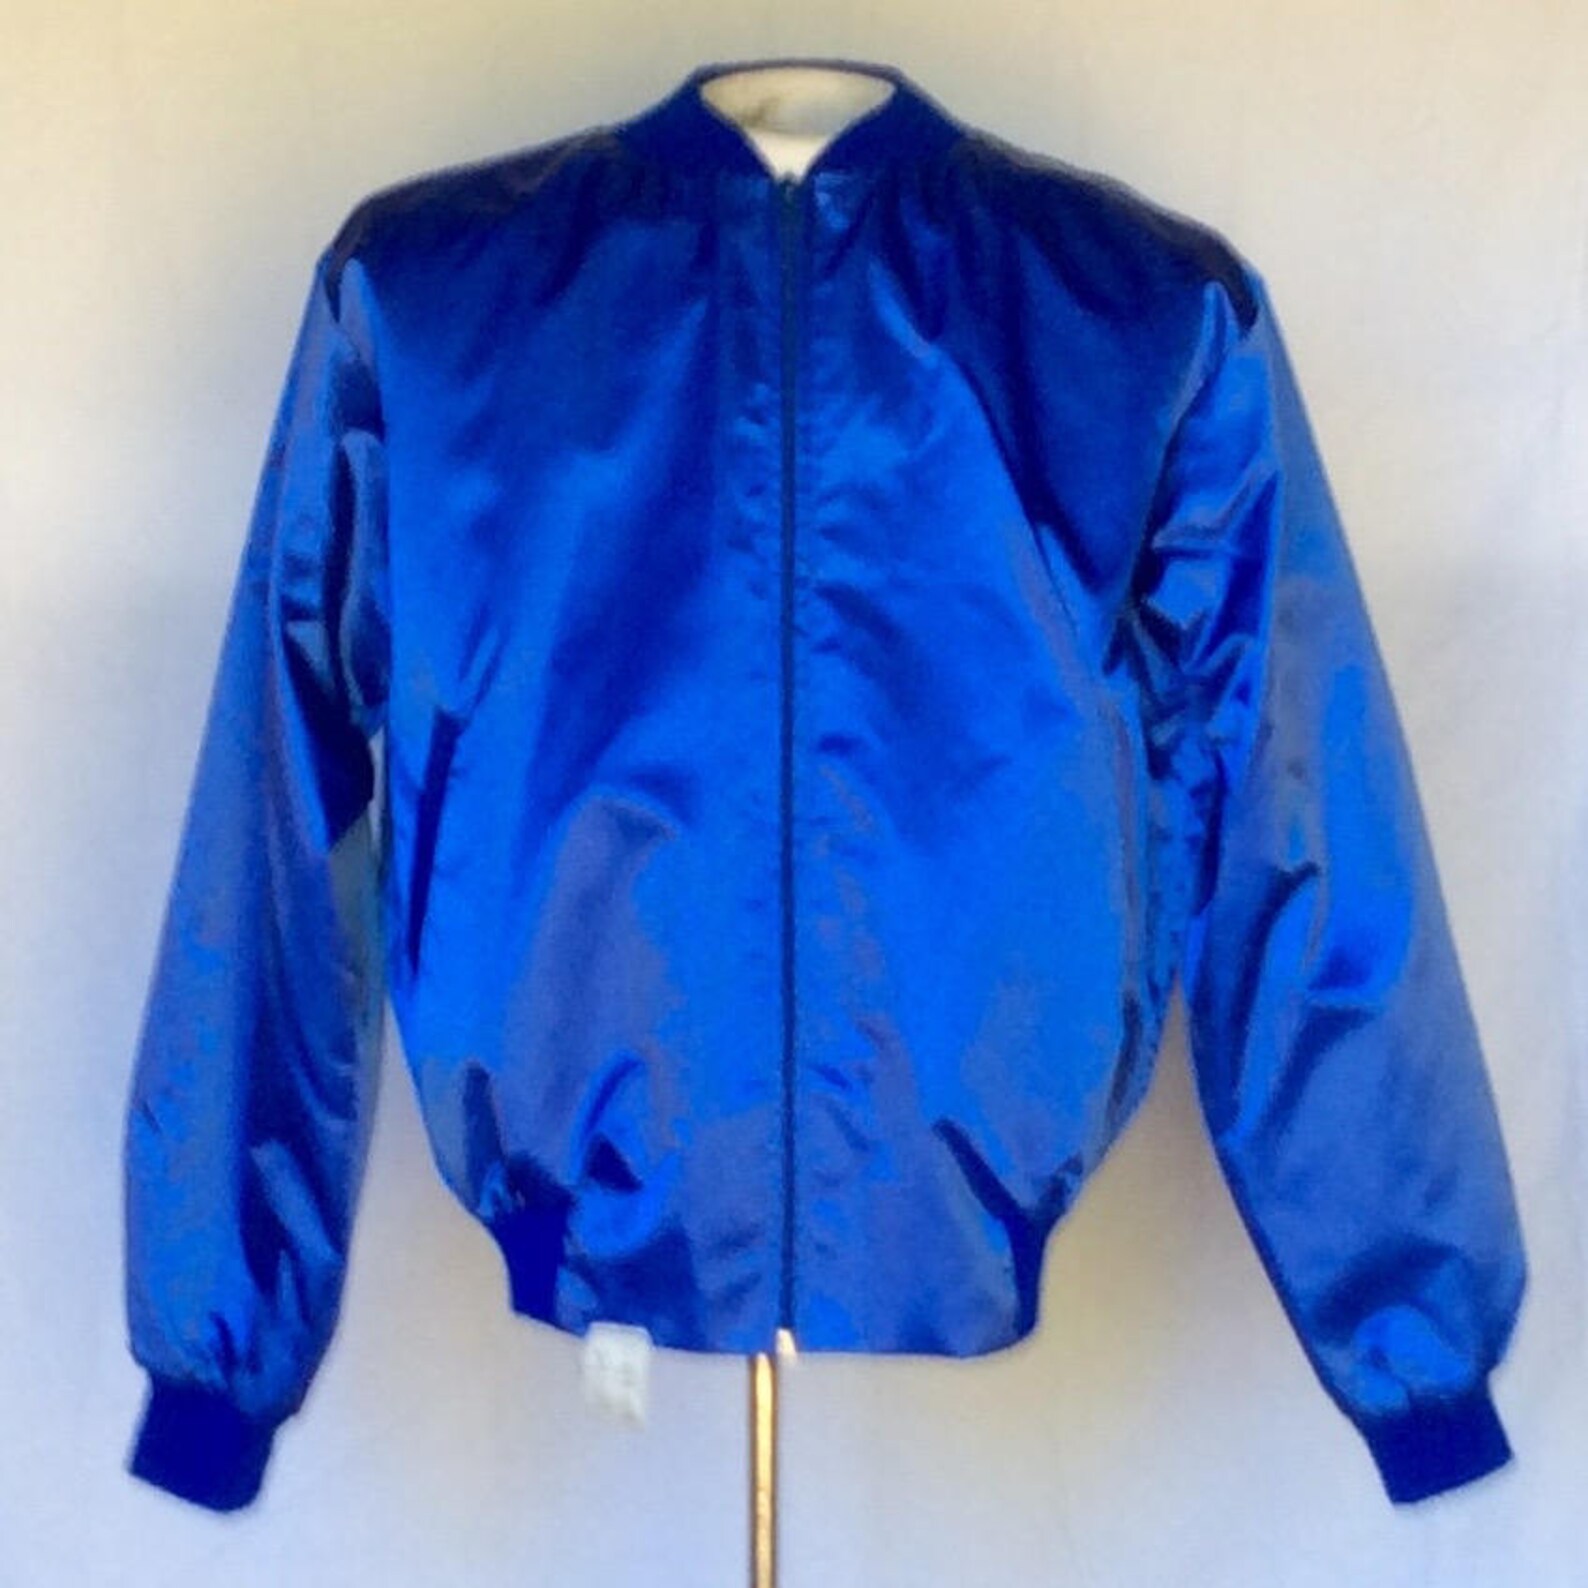 Vintage 1989-90s Souvenir Military Tour Jacket - Etsy